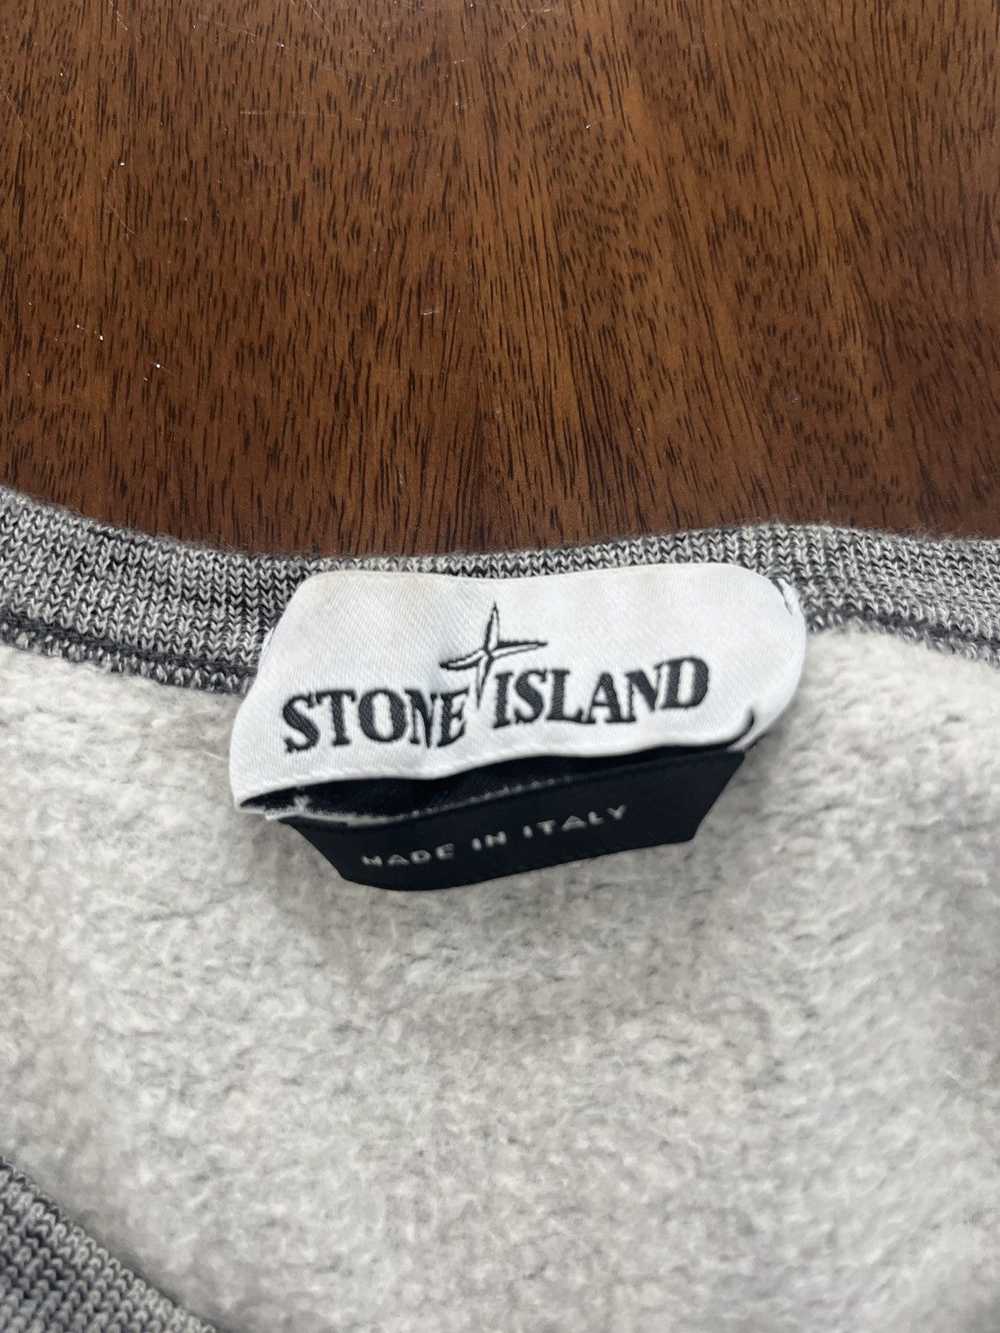 Stone Island Stone Island grey sweater - image 4